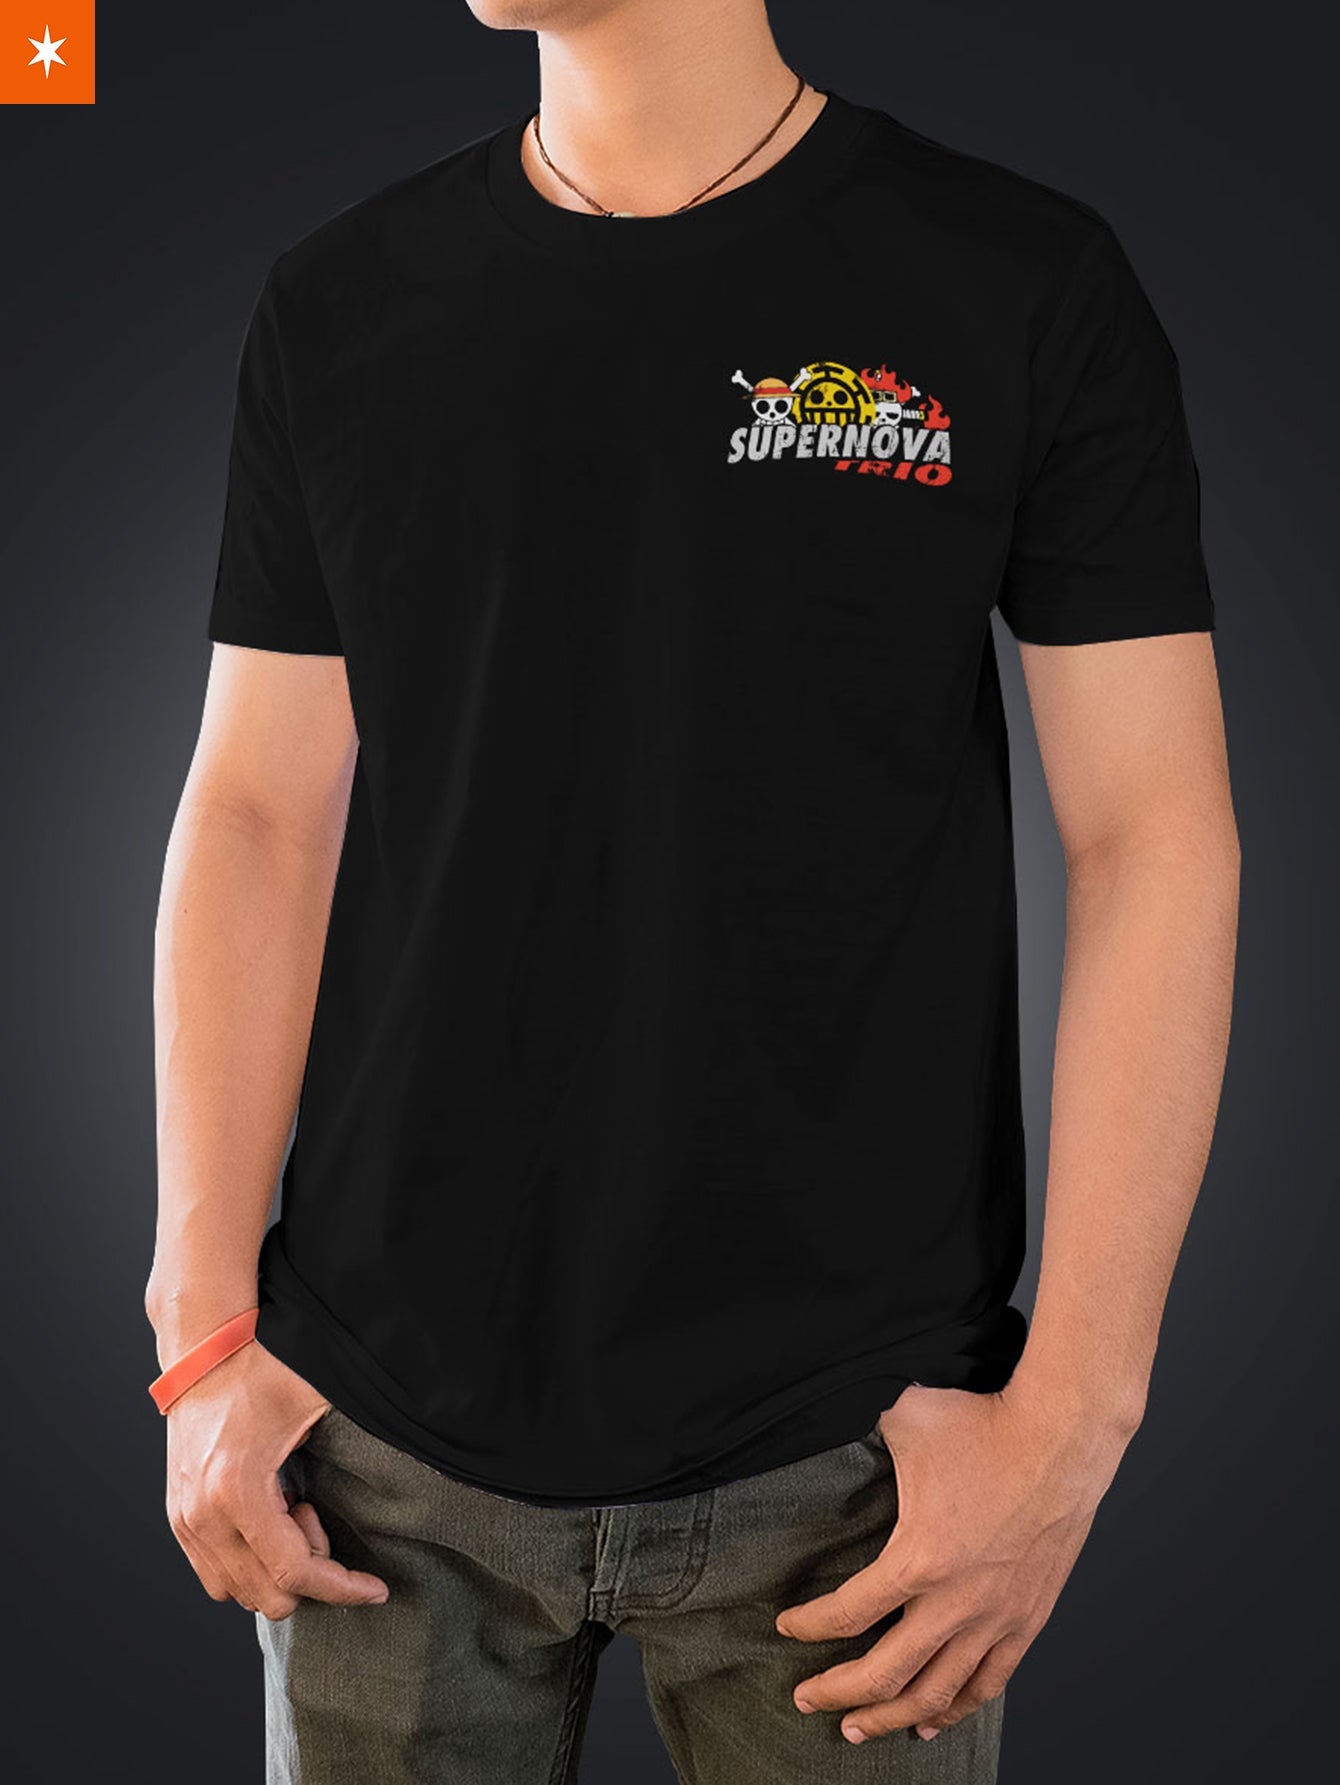 Fandomaniax - Super Trio Pirates Unisex T-Shirt